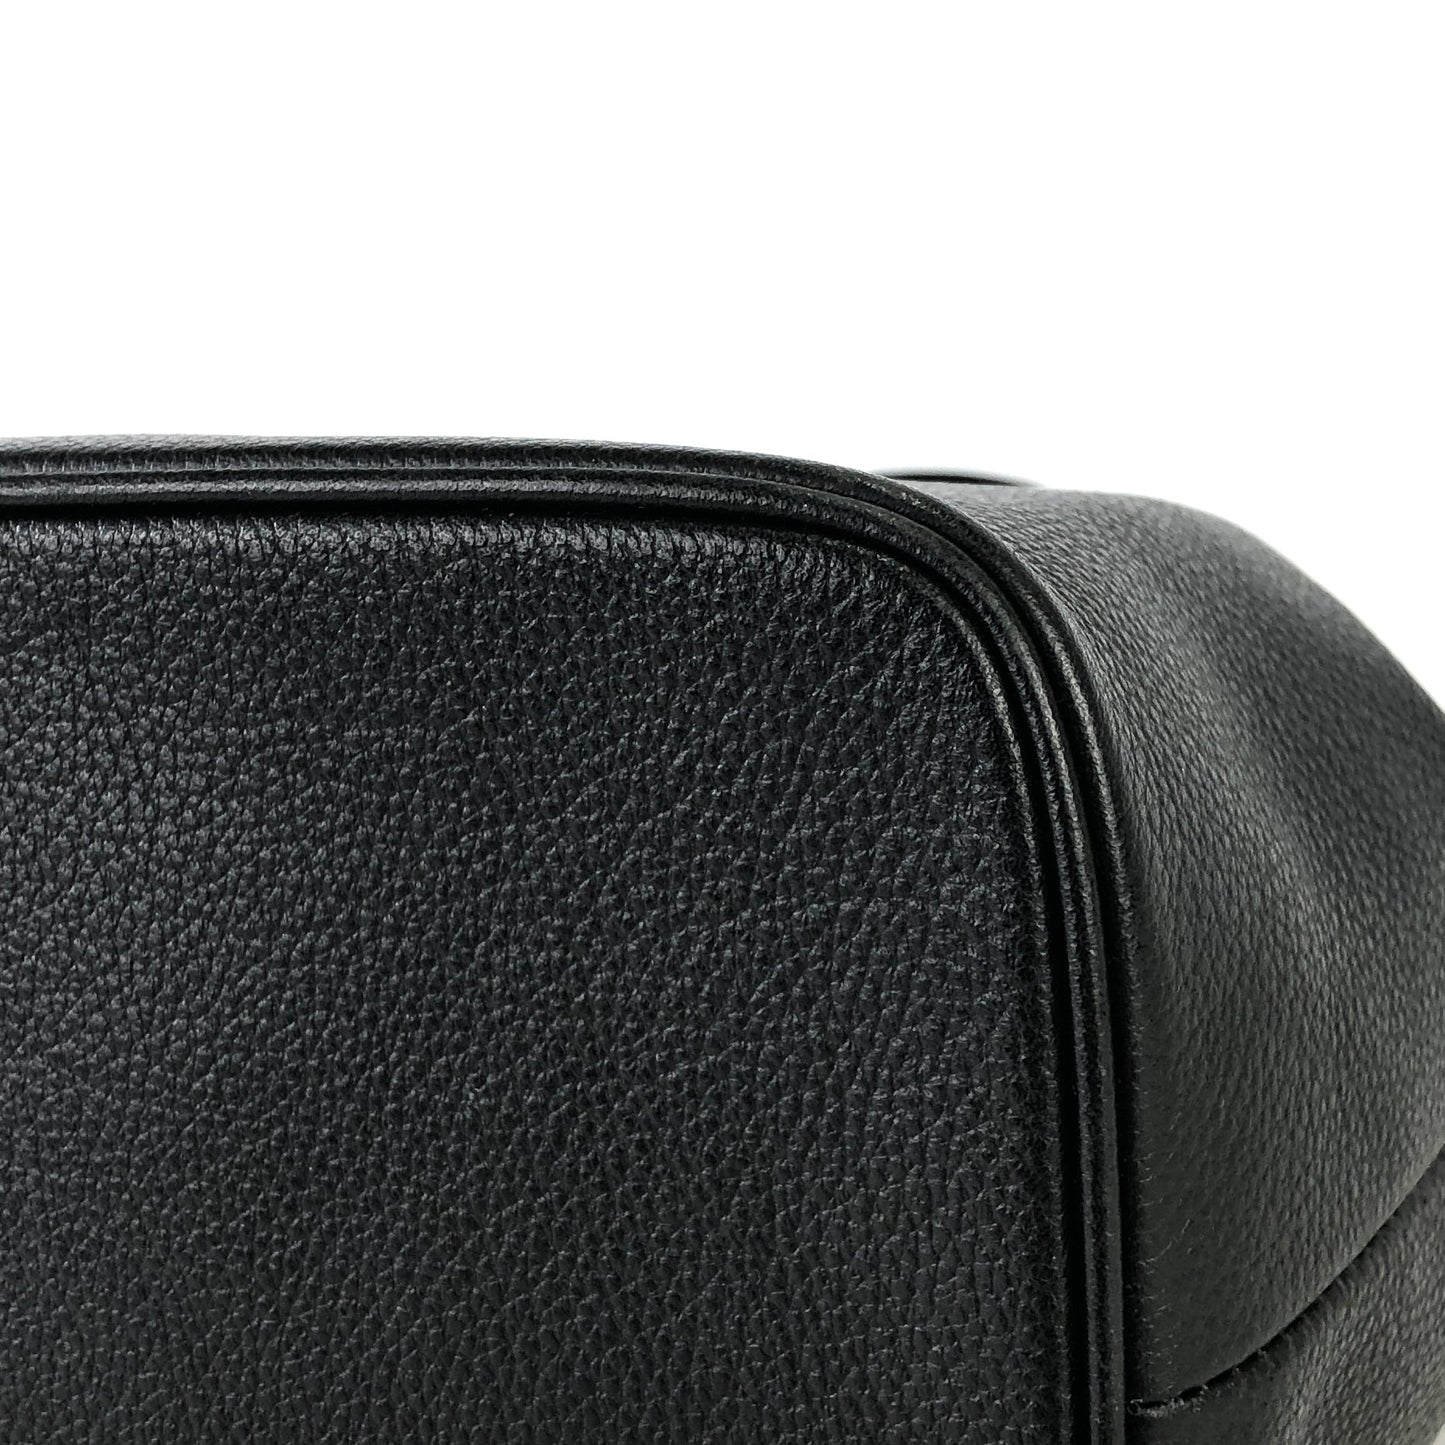 Yves Saint Laurent diamond cut YSL 2way leather shoulder bag handbag black vintage old axstfw